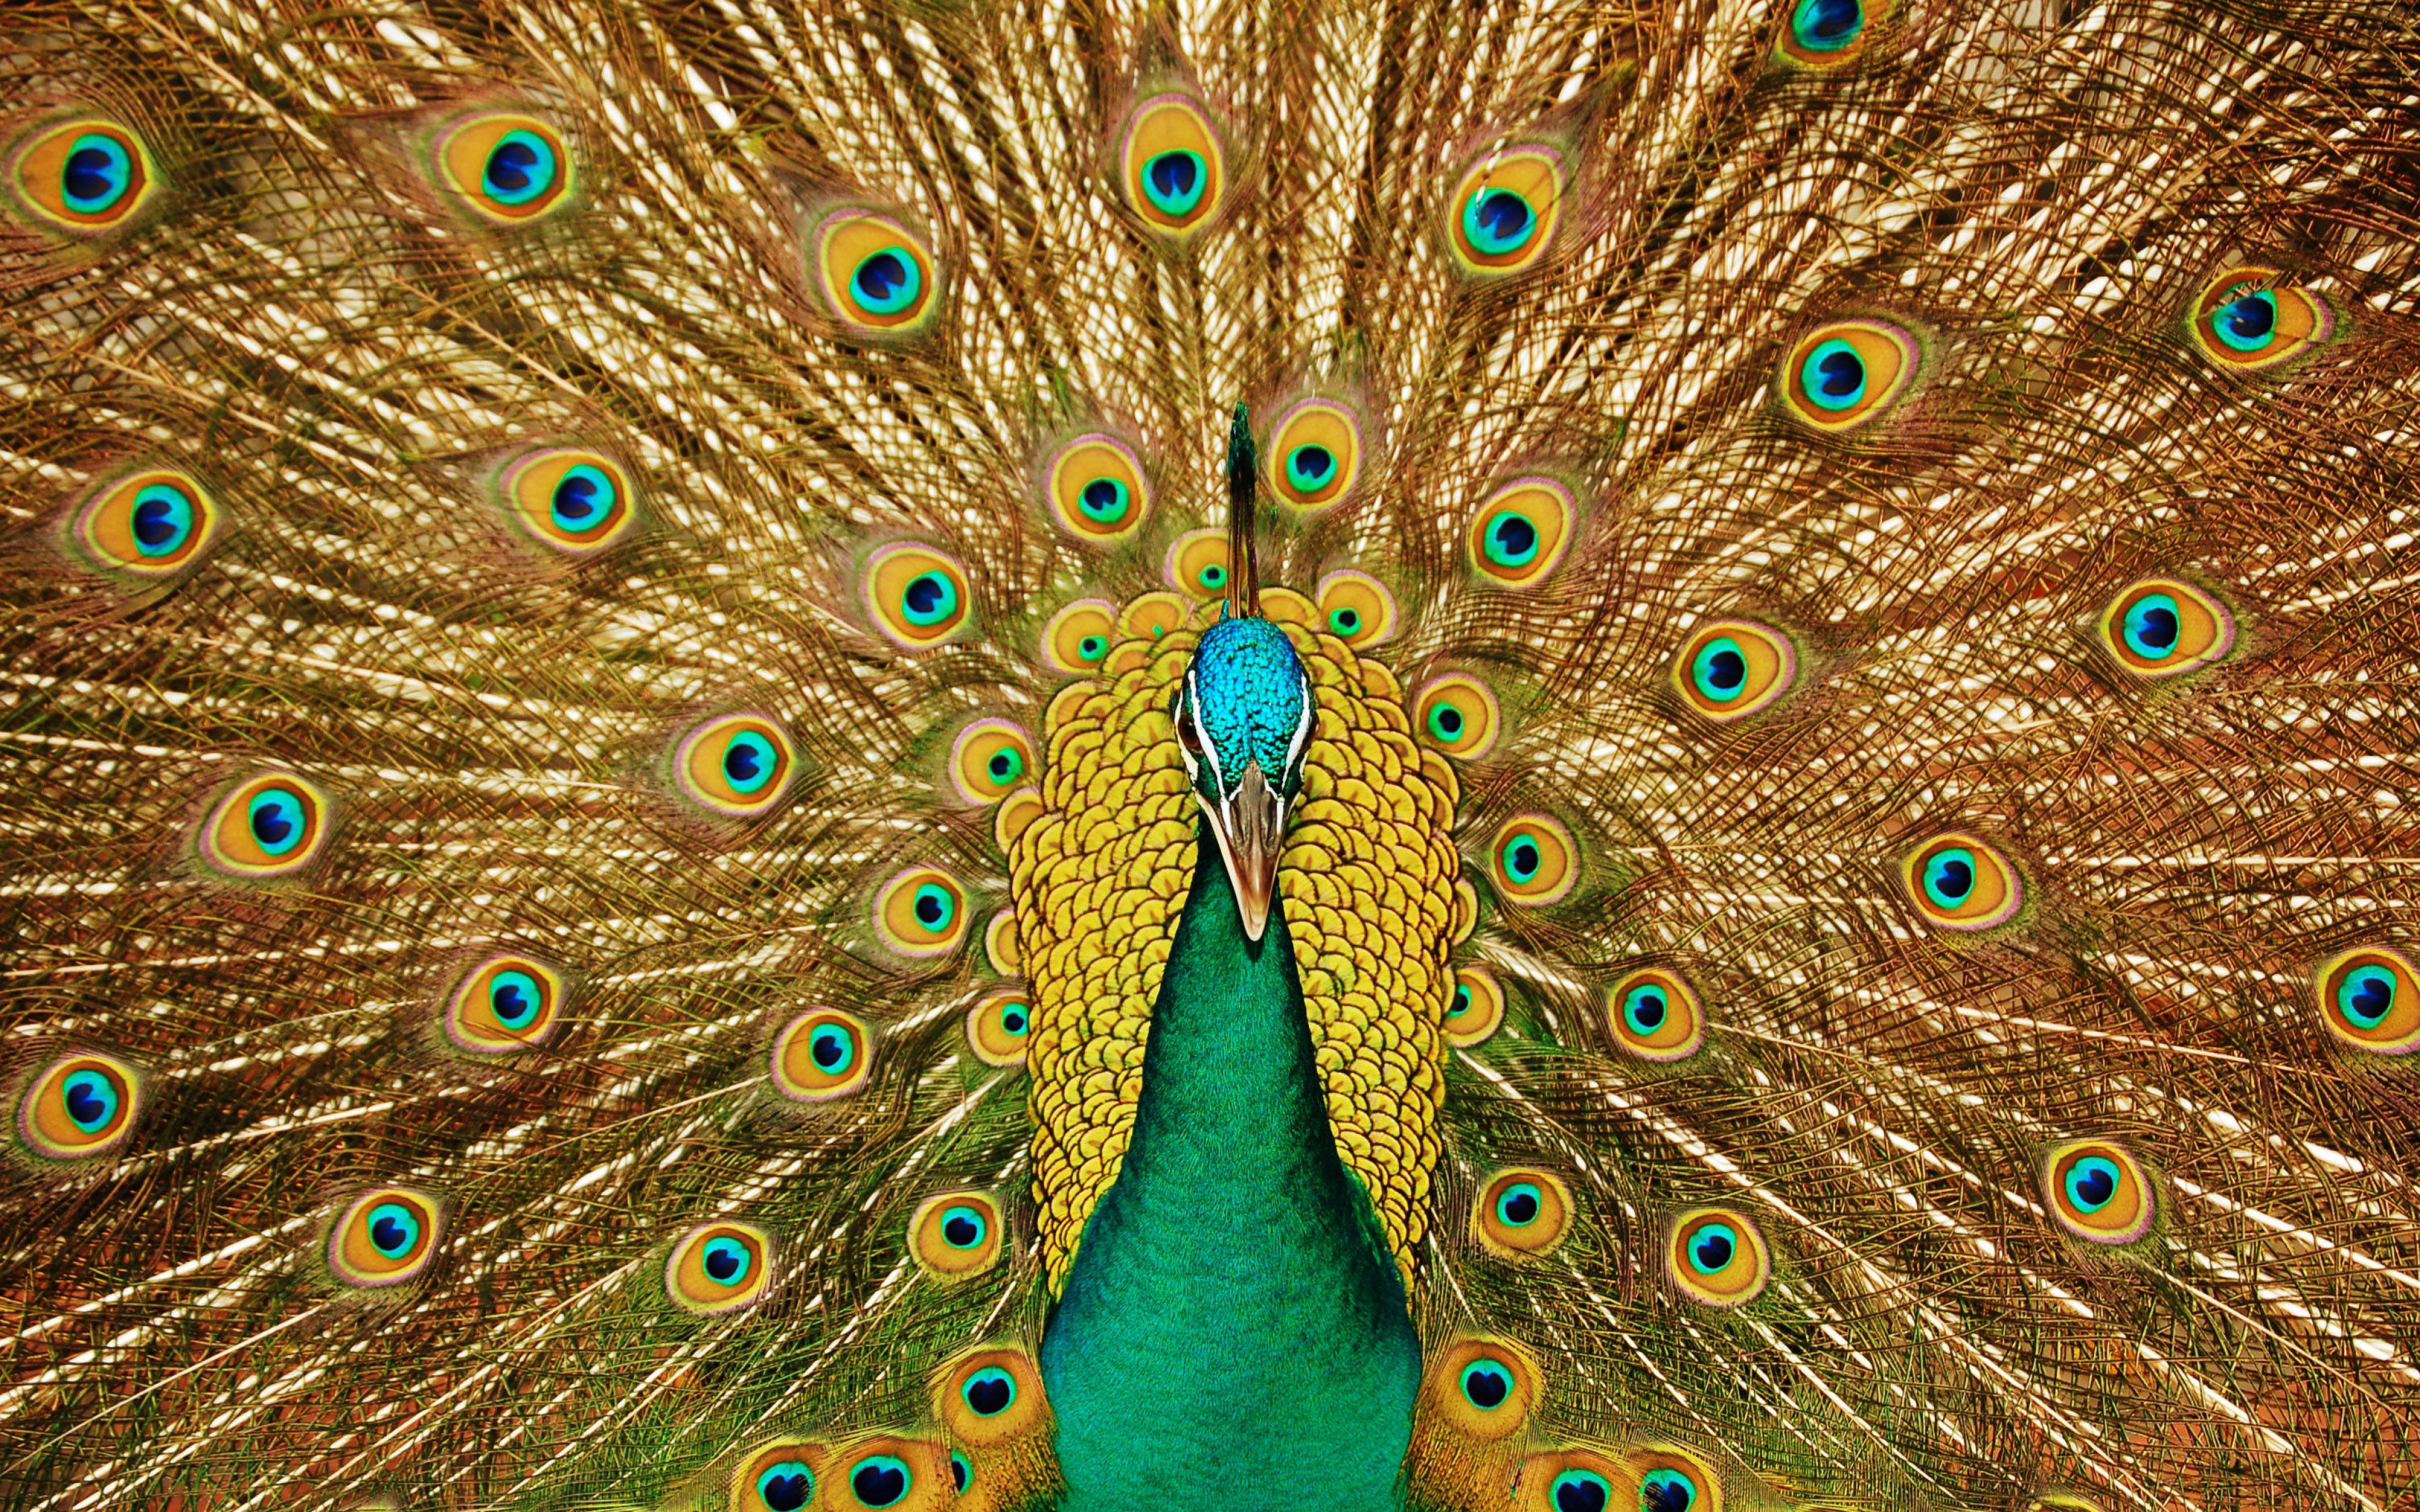 50+] Peacock Feather Wallpaper Windows 10 - WallpaperSafari